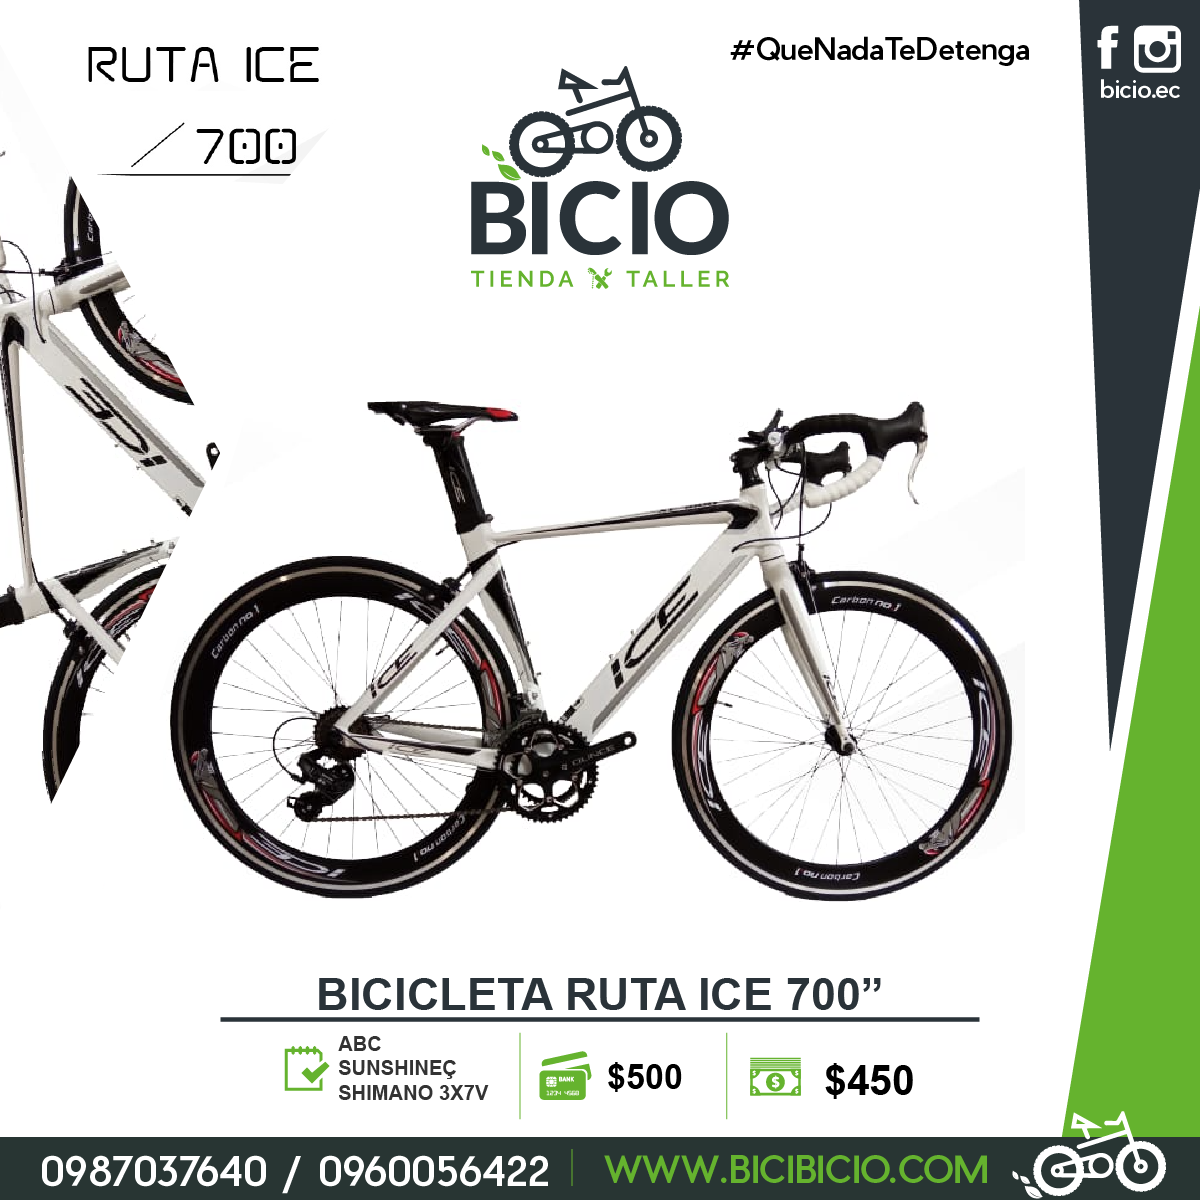 Gasto Permitirse bolita Bicicleta Ruta ice 700” - Bicio tienda - taller de bicicletas